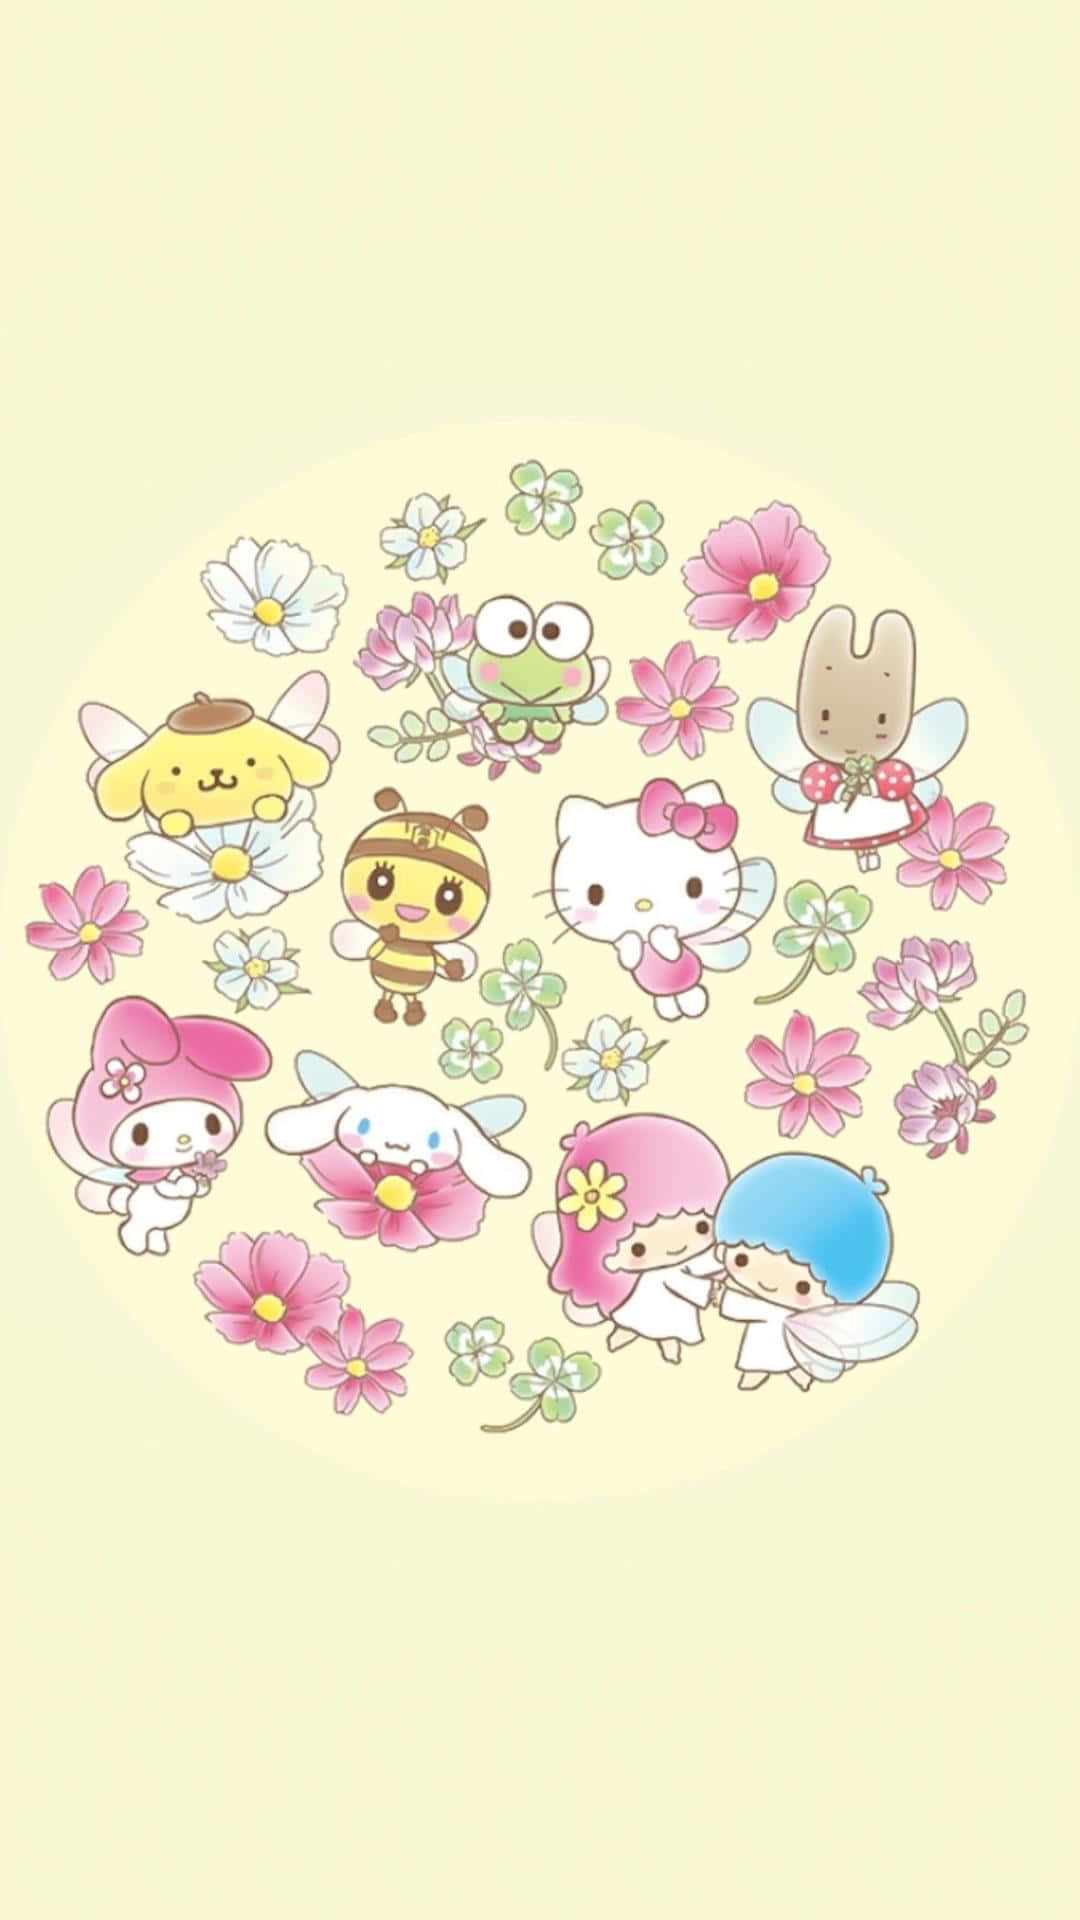 Sanrio Characters Floral Aesthetic.jpg Wallpaper